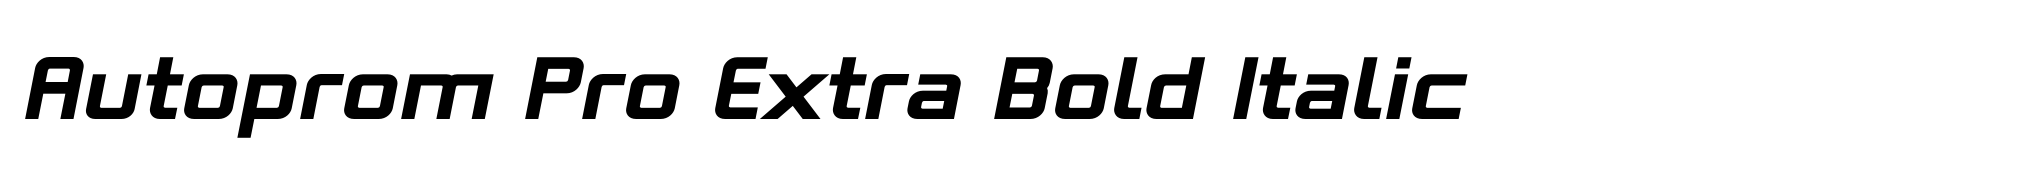 Autoprom Pro Extra Bold Italic image